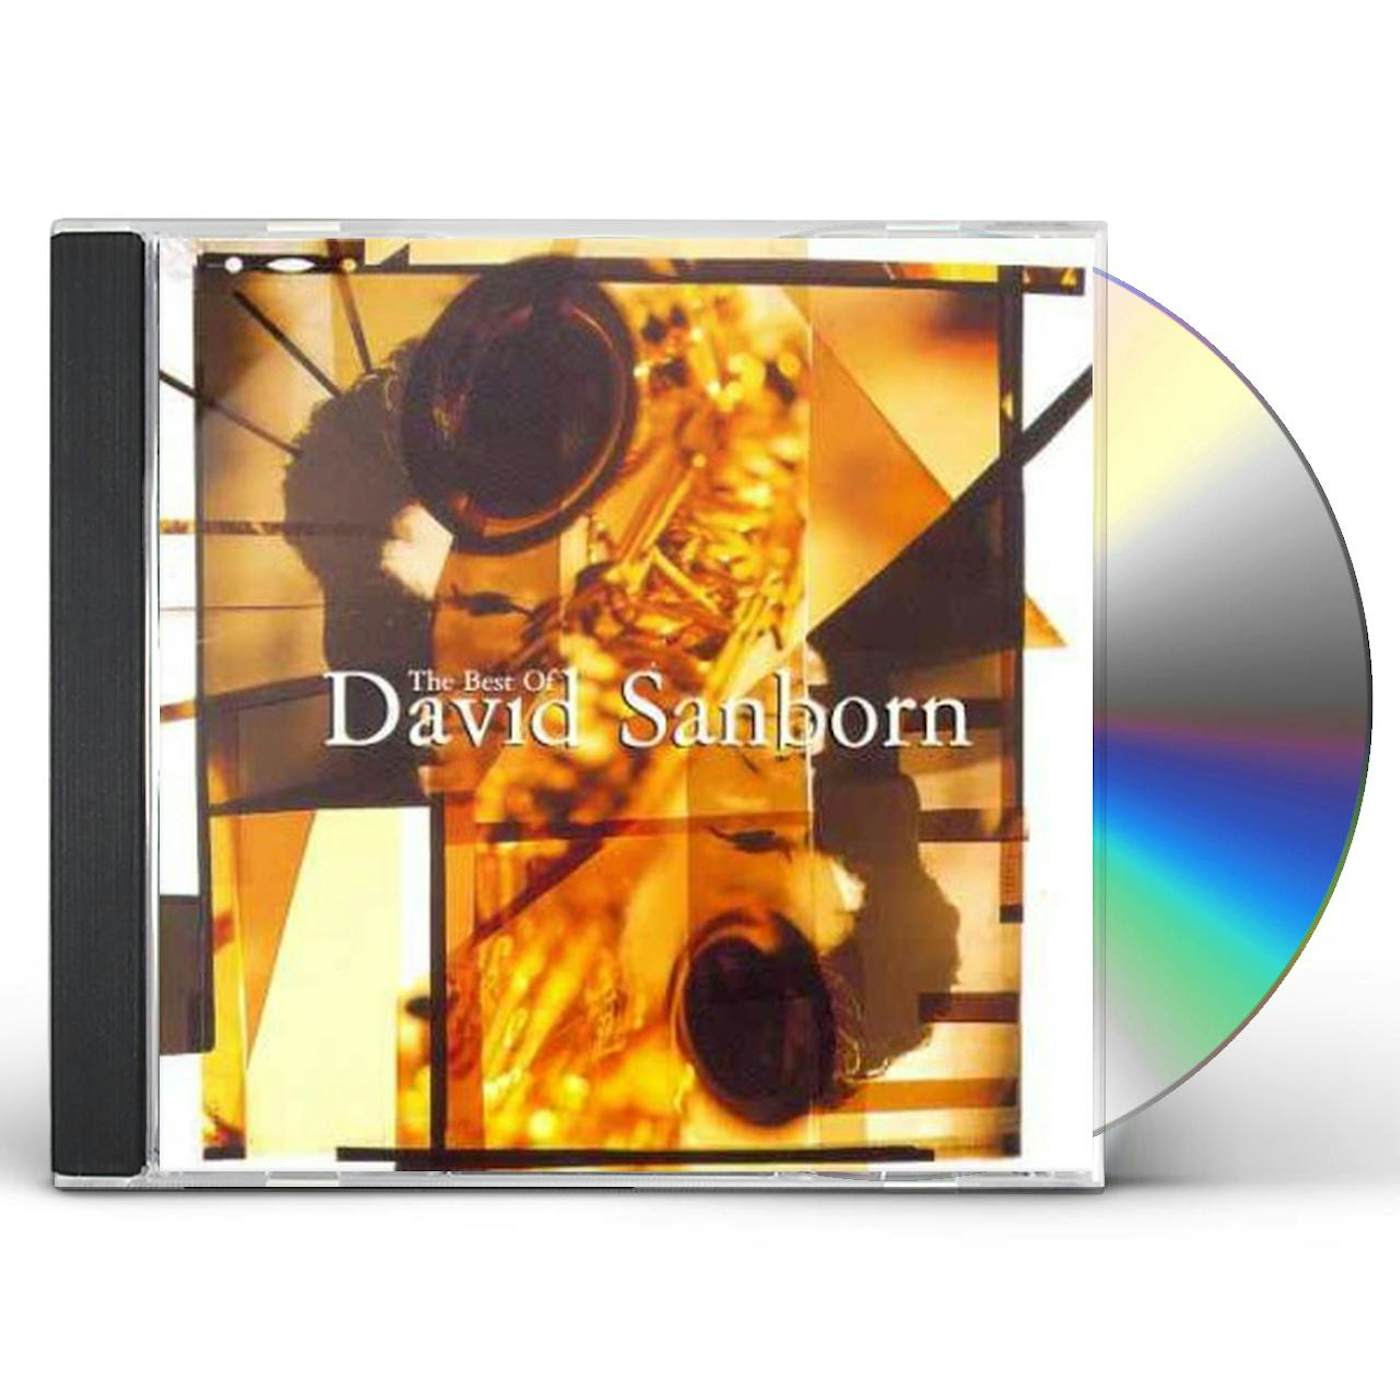 BEST OF DAVID SANBORN CD